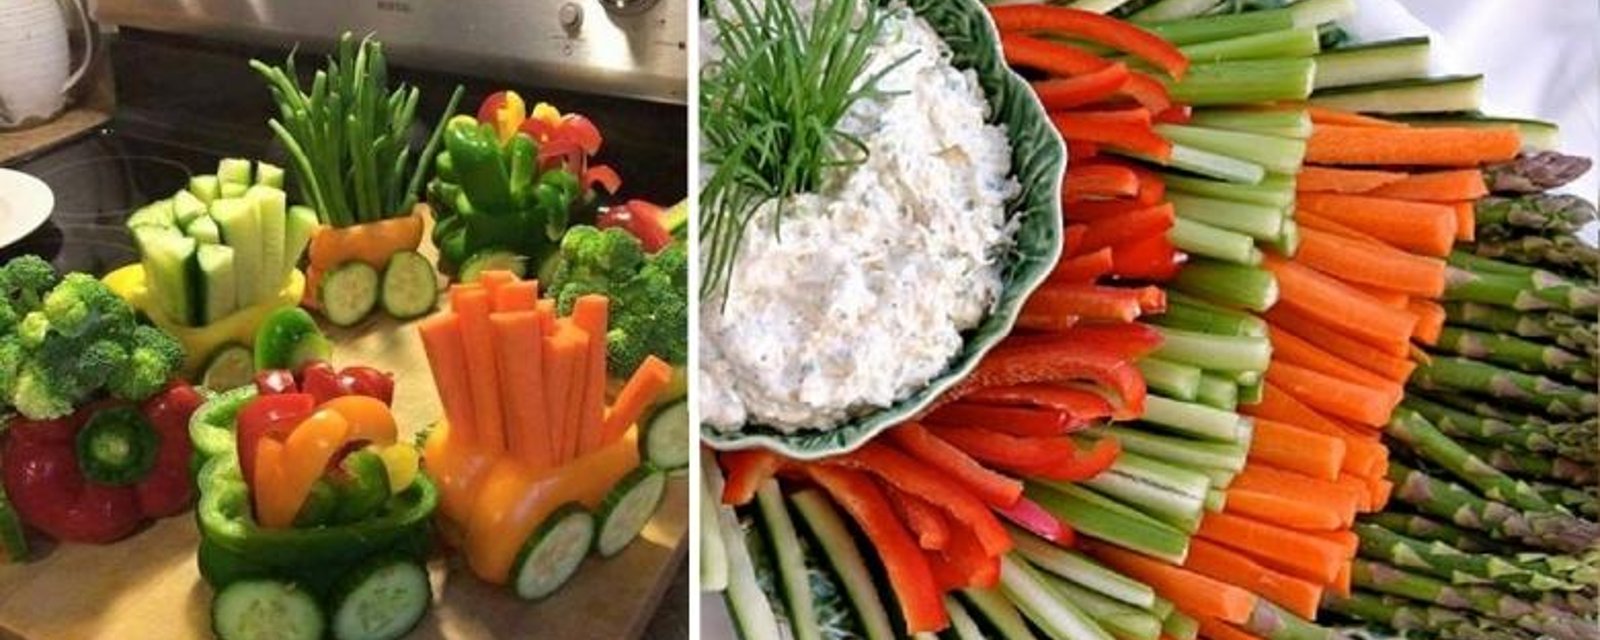 Quand les légumes décorent la table! 16 magnifiques façons de les servir! 